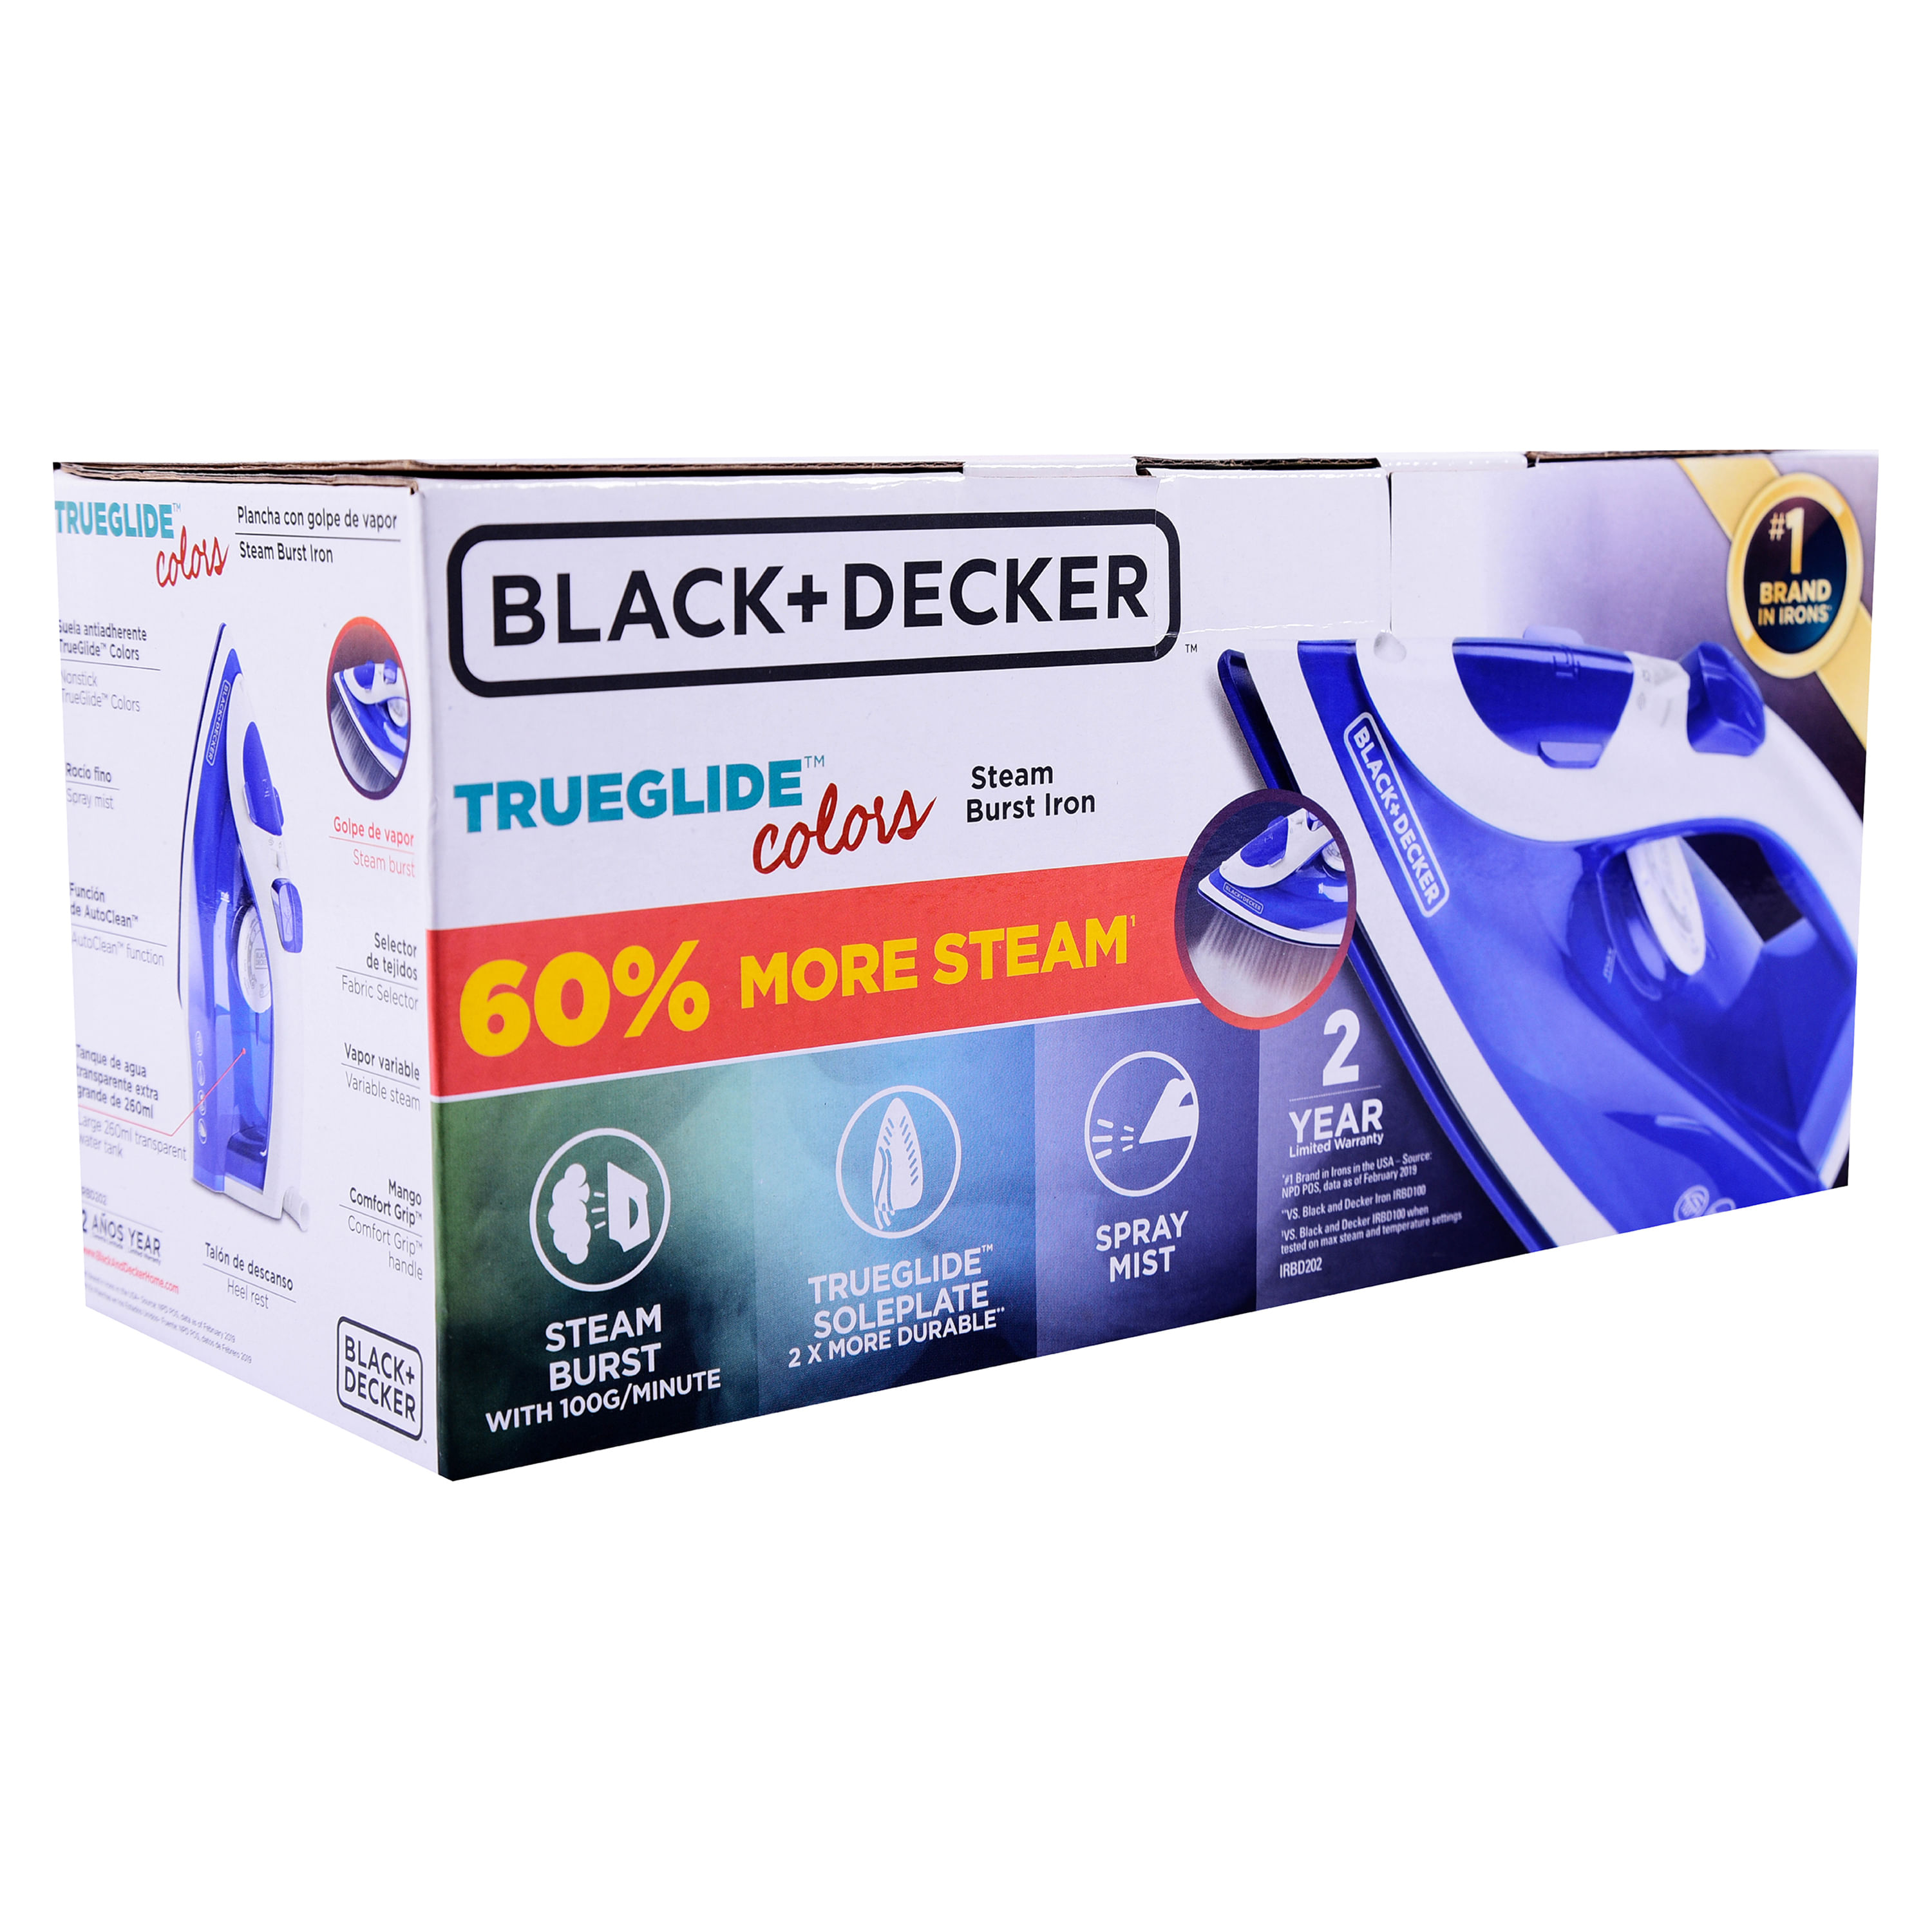 Plancha de Vapor BLACK+DECKER® TrueGlide Colors con Golpe de Vapor